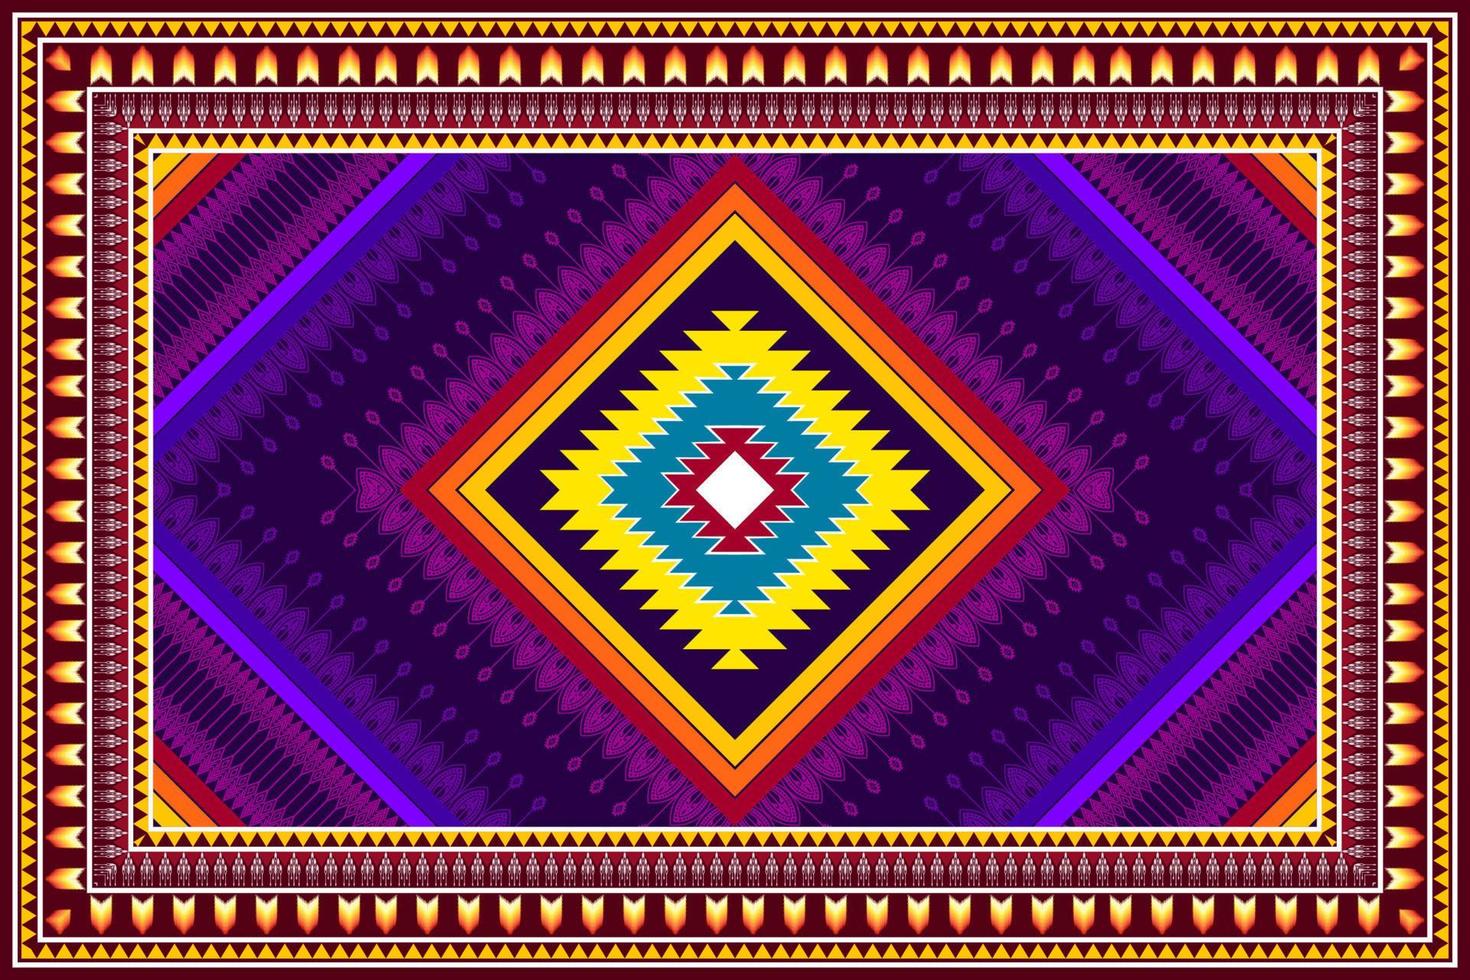 abstrakt geometrisk etnisk mönsterdesign. Aztec tyg matta mandala prydnad etnisk chevron textil dekoration tapeter. tribal boho infödda etniska traditionella broderi vektor bakgrund